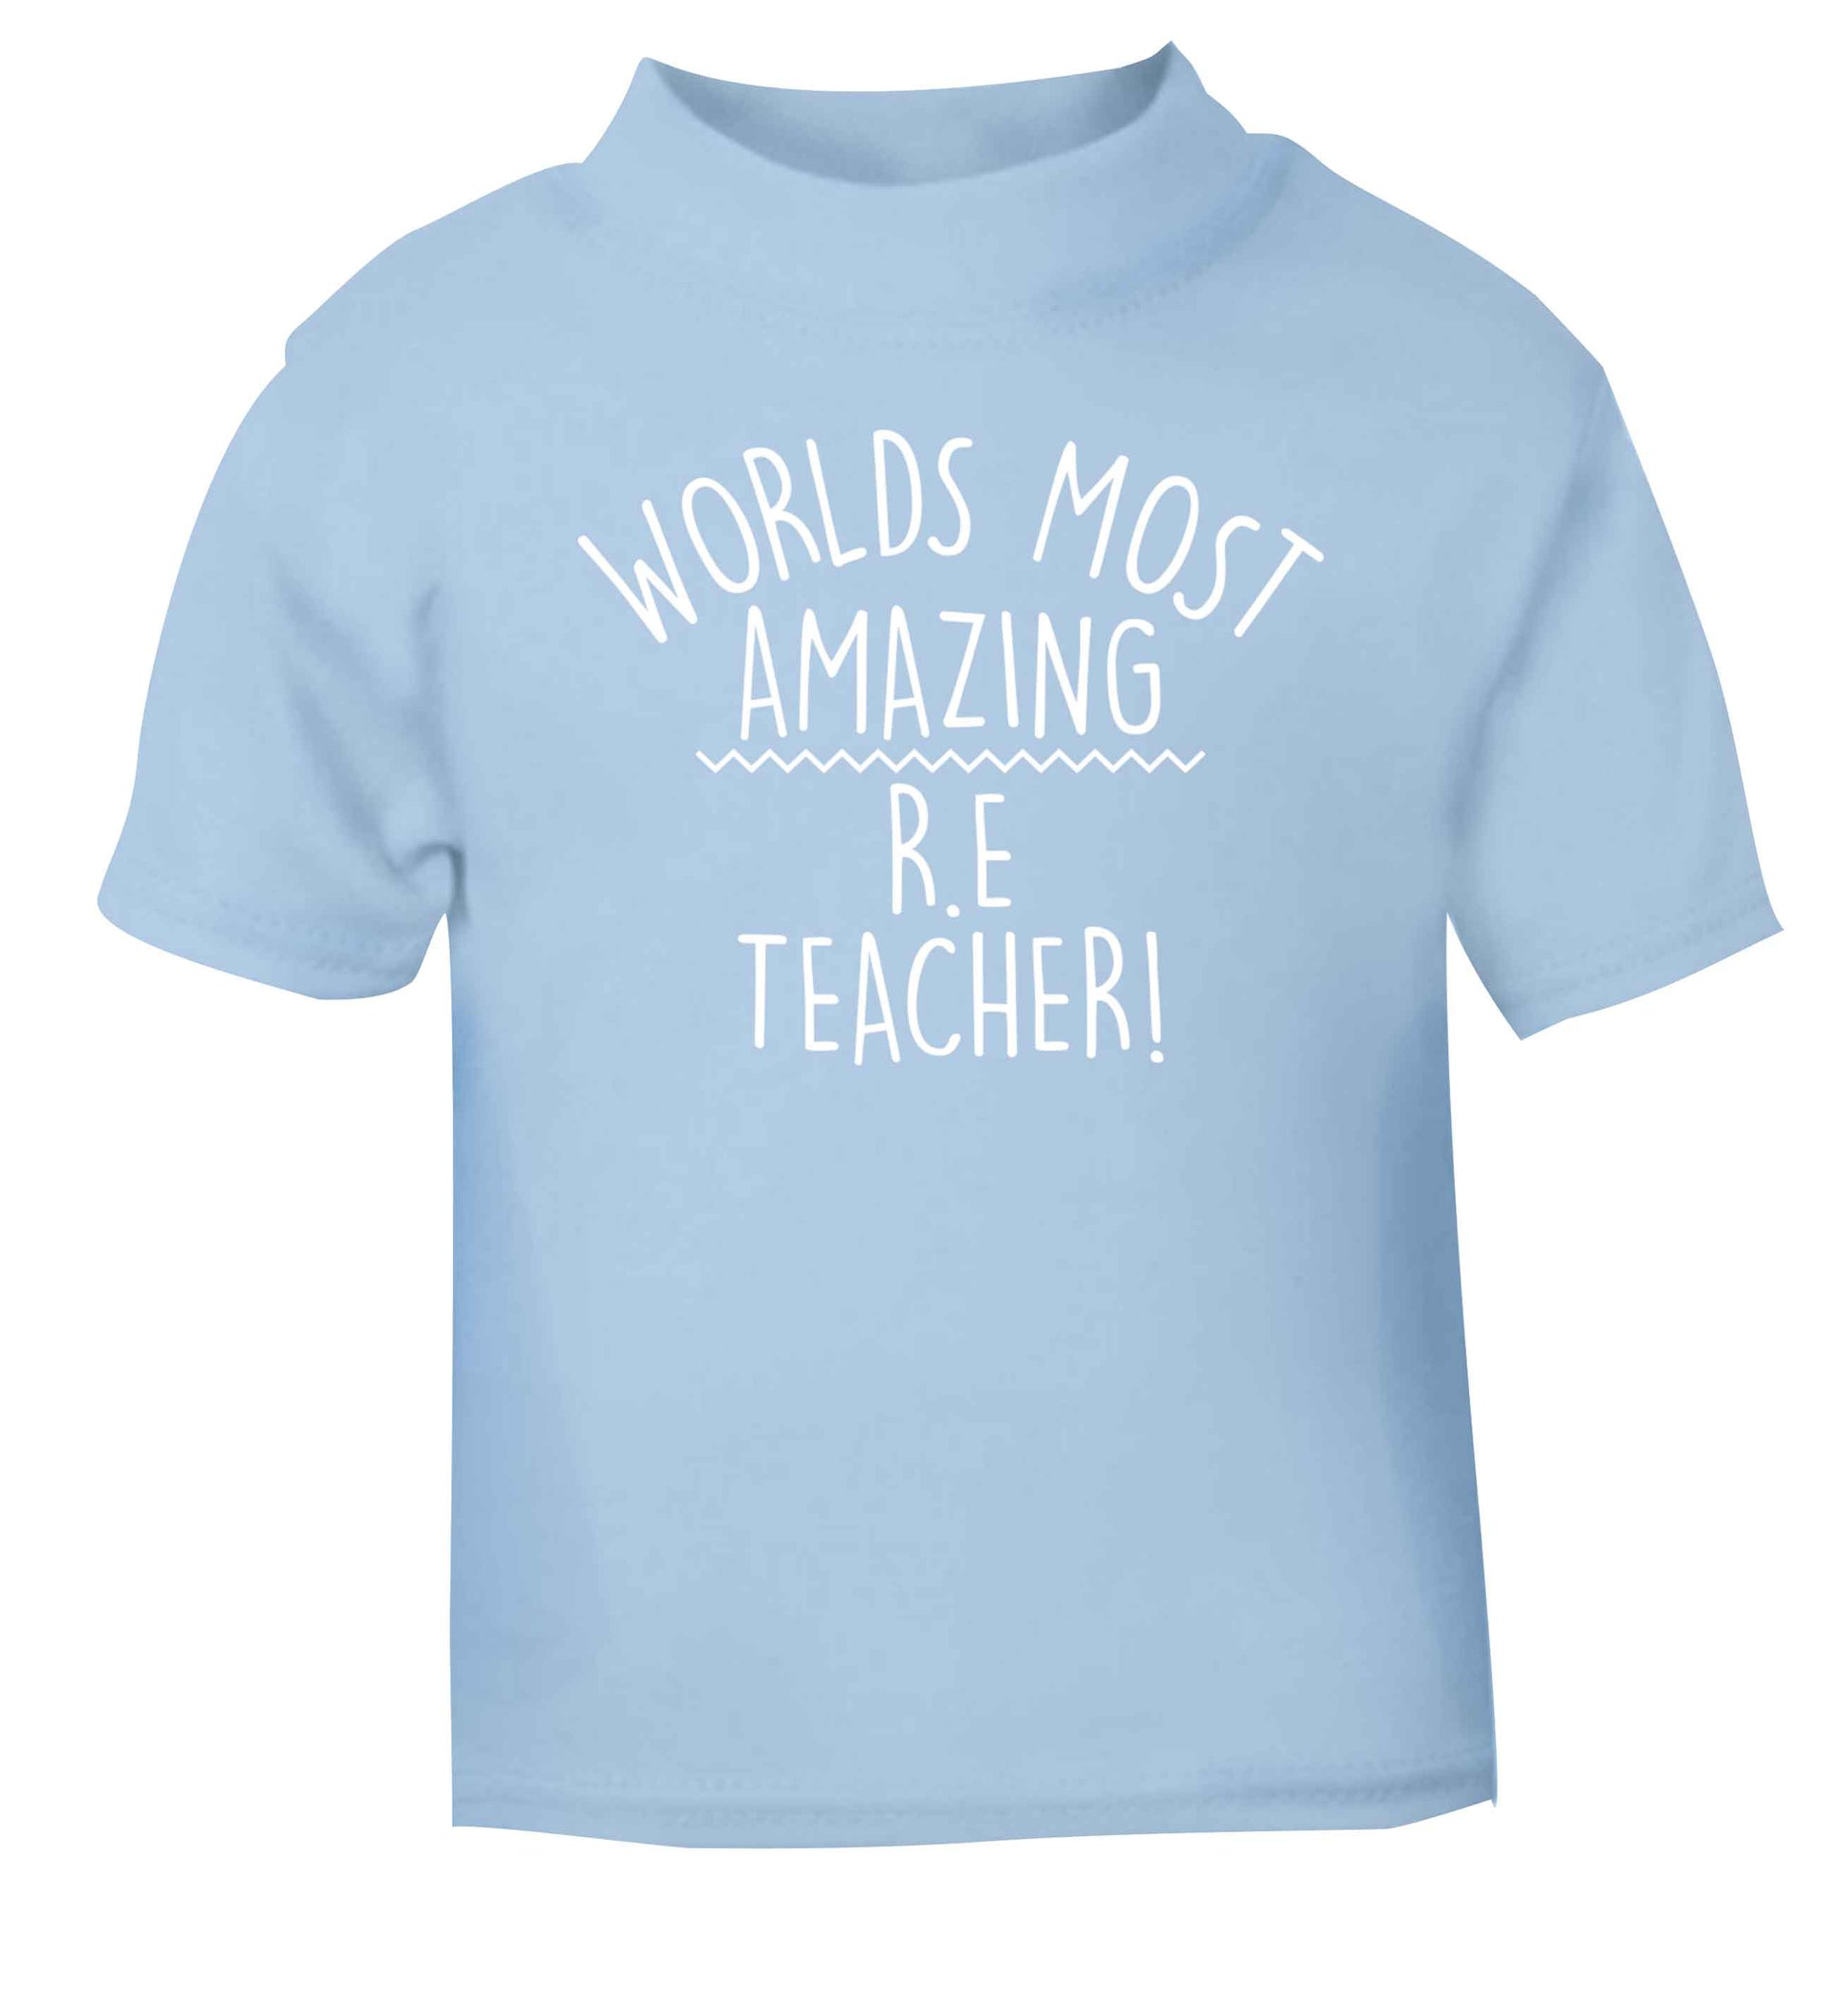 Worlds most amazing R.E teacher light blue baby toddler Tshirt 2 Years